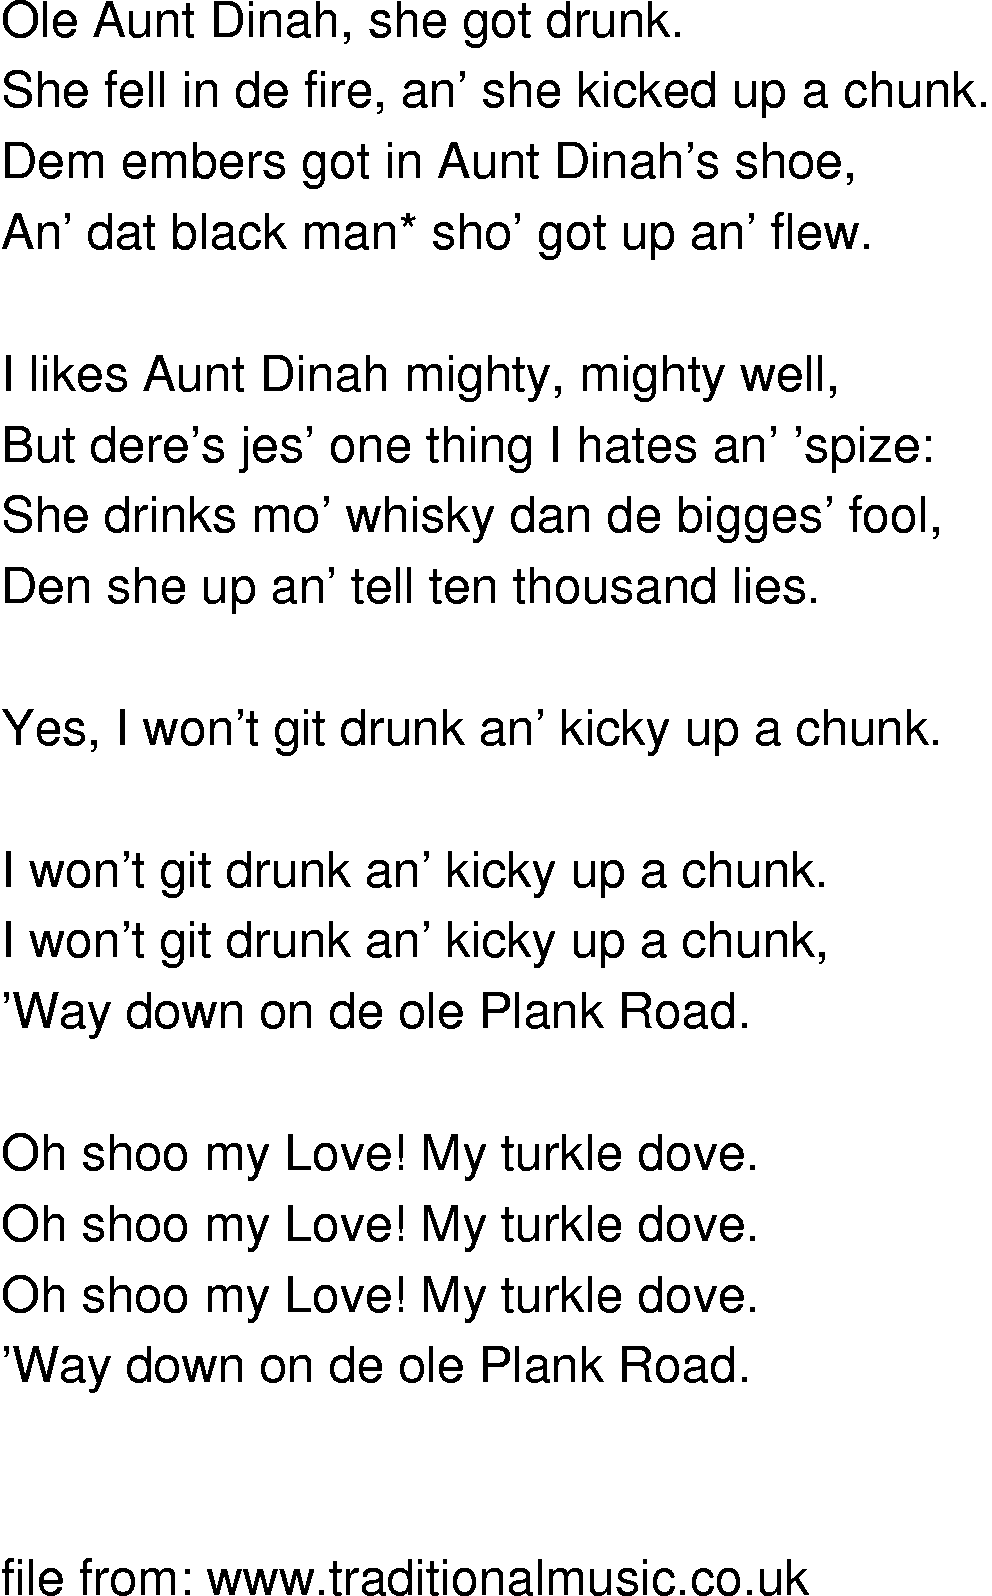 Old-Time (oldtimey) Song Lyrics - aunt dinah drunk